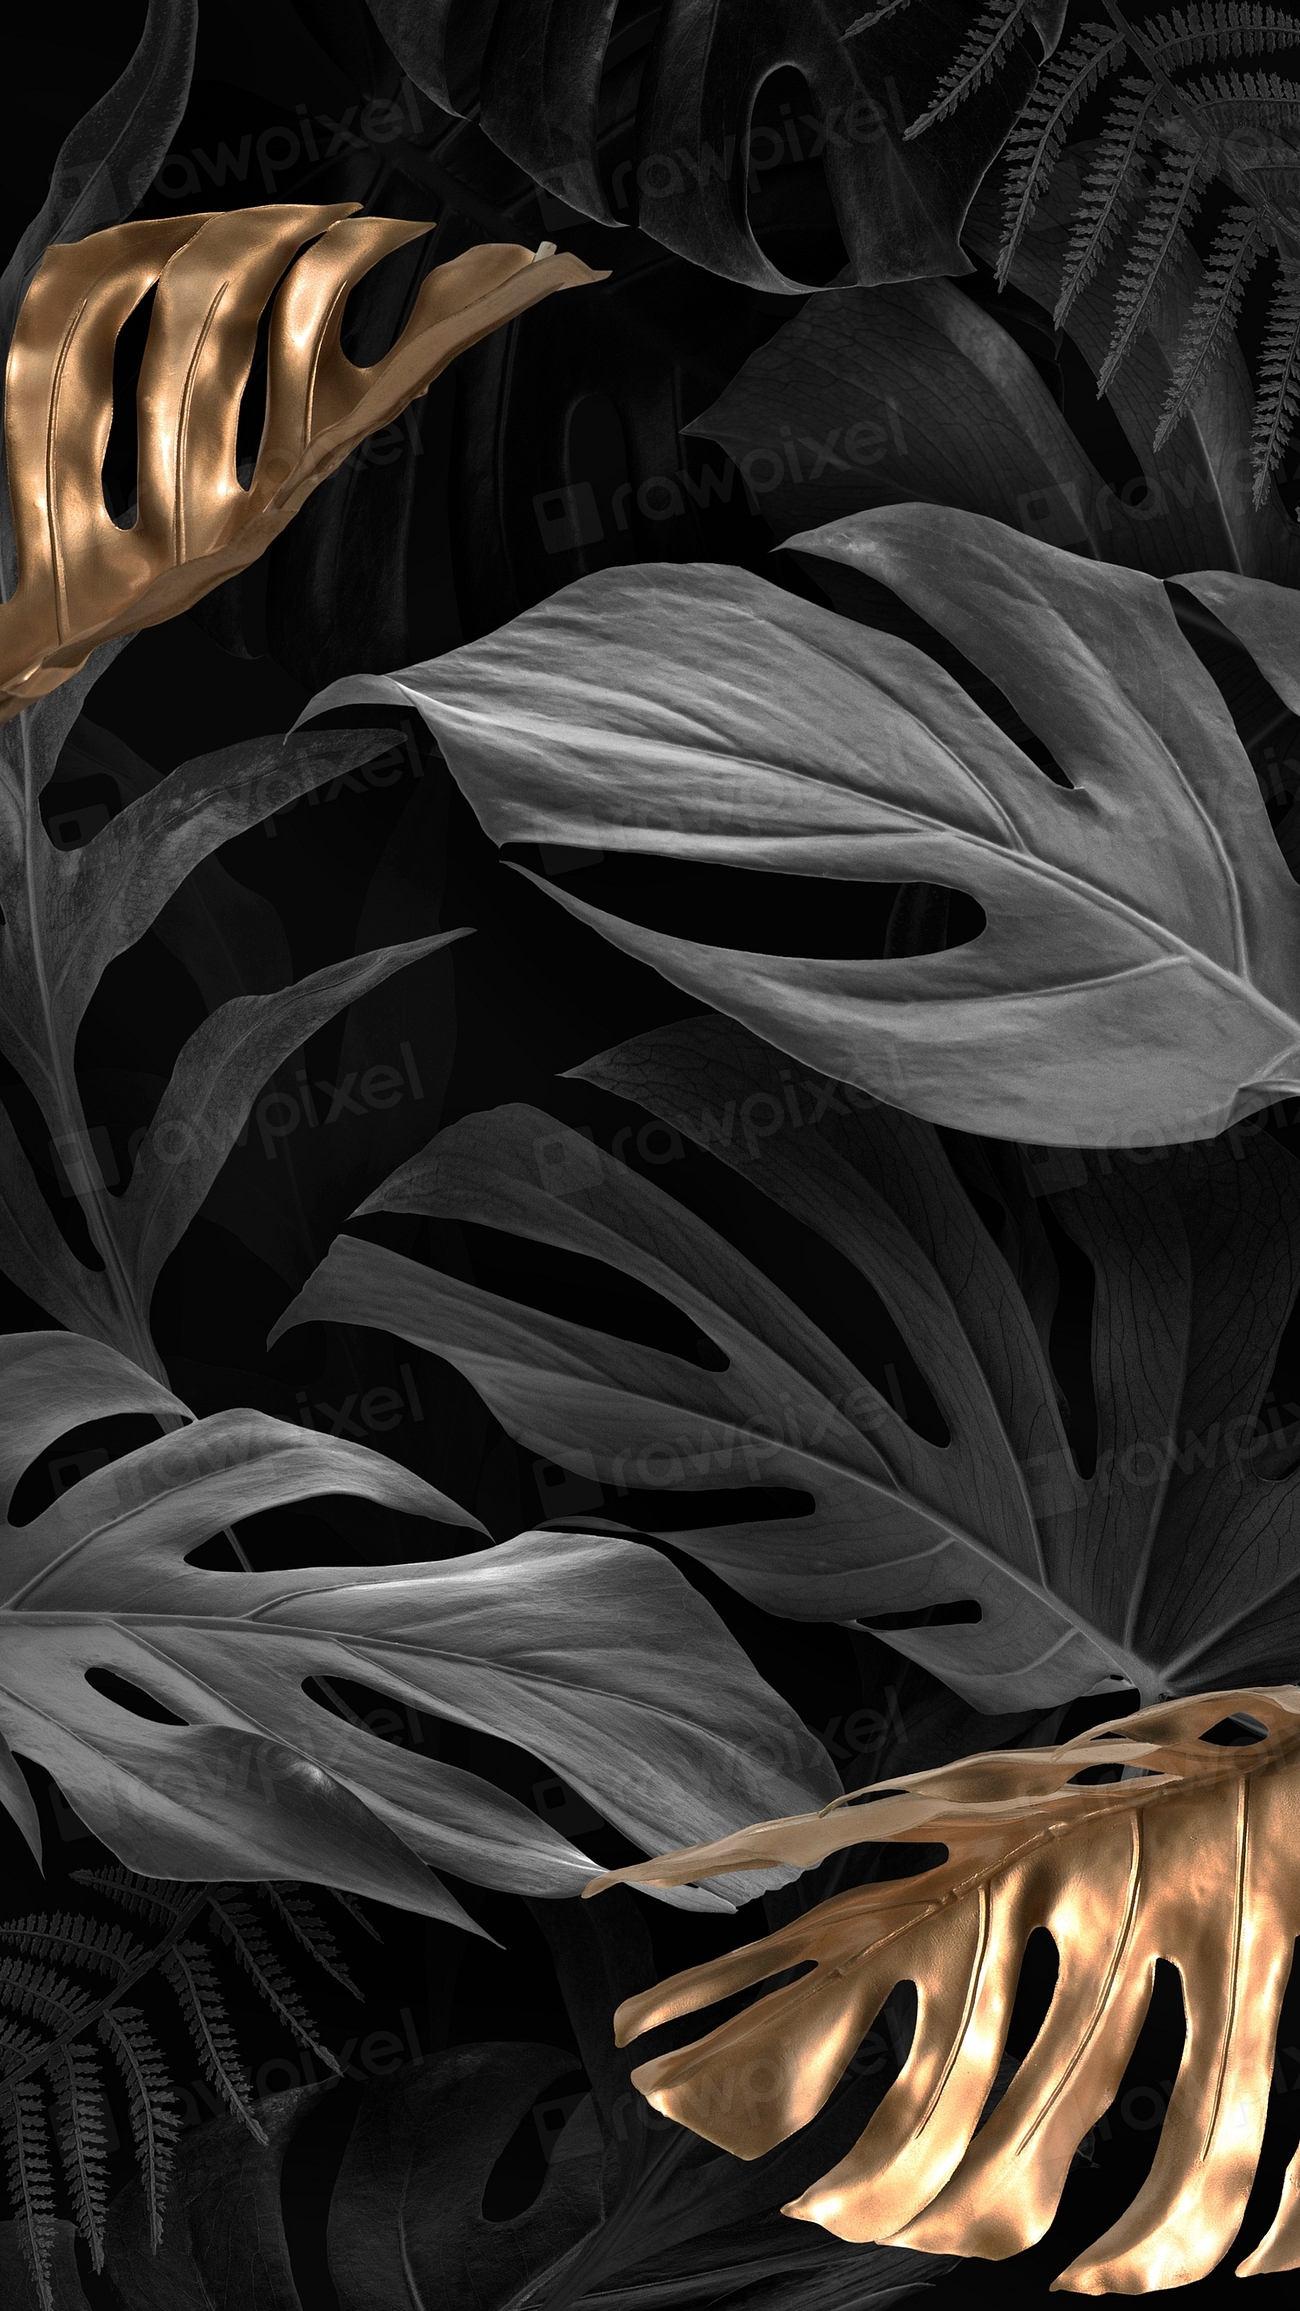 Black leaf mobile wallpaper, nature | Premium Photo - rawpixel